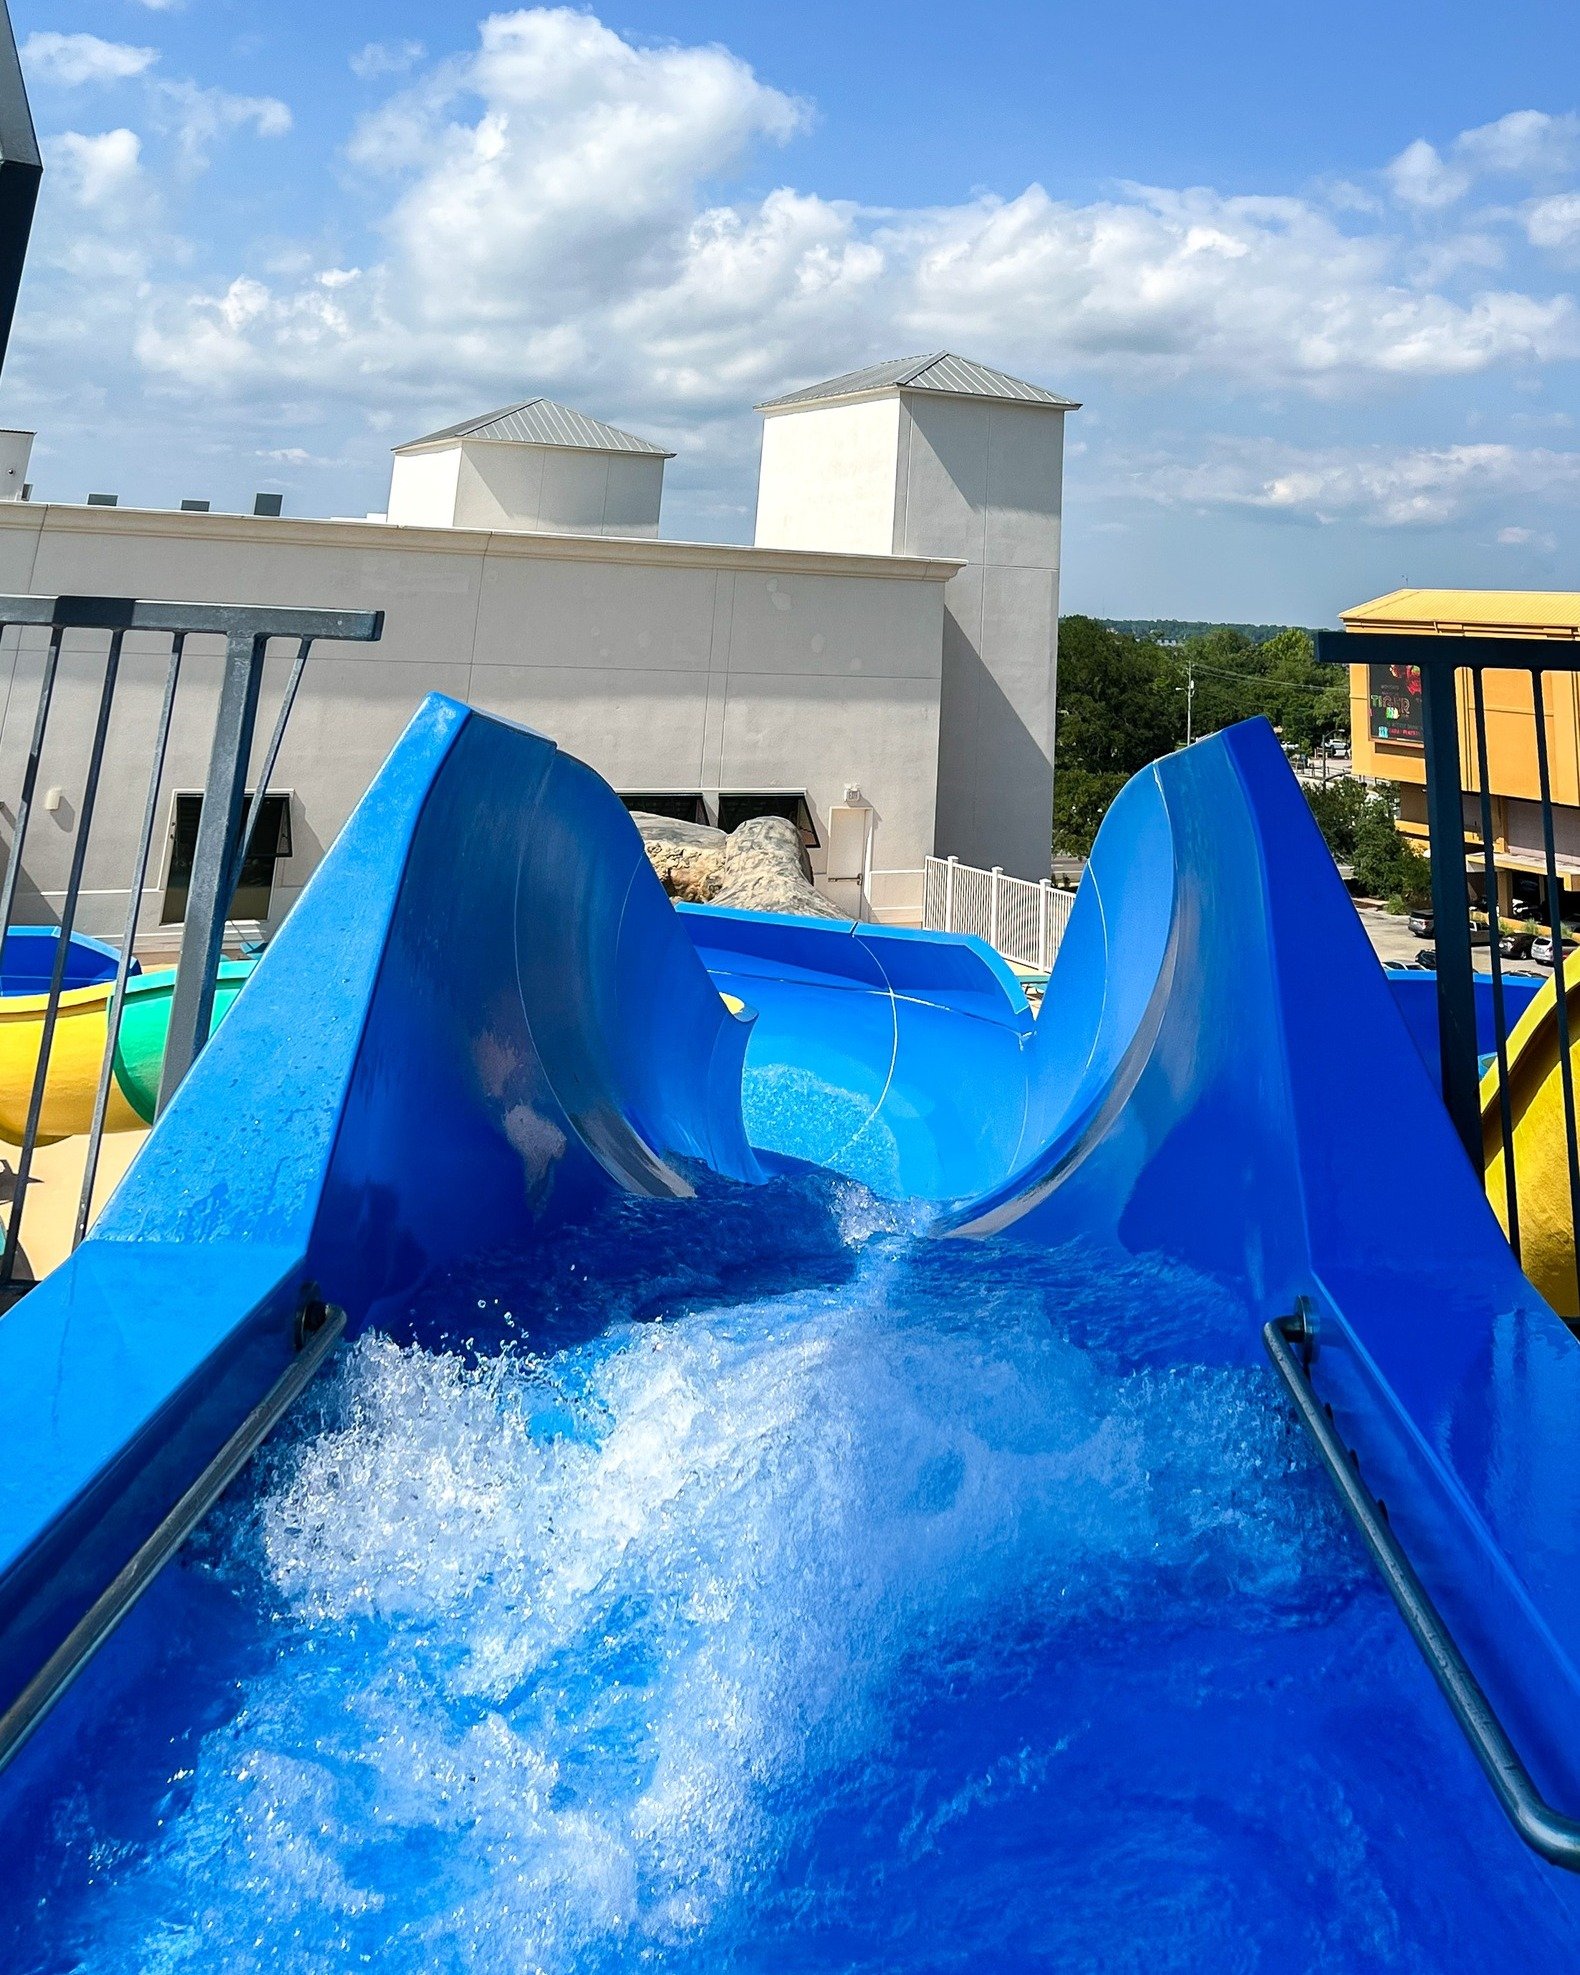 Meet ya at the bottom of the slide?

#poolseason #poolszn #familyresort #familyfun #gulfcoast #biloxi #margaritaville #margaritavilleresortbiloxi #lazyriver #poolslides #waterplayground#poolseason #poolszn #familyresort #familyfun #gulfcoast #biloxi 